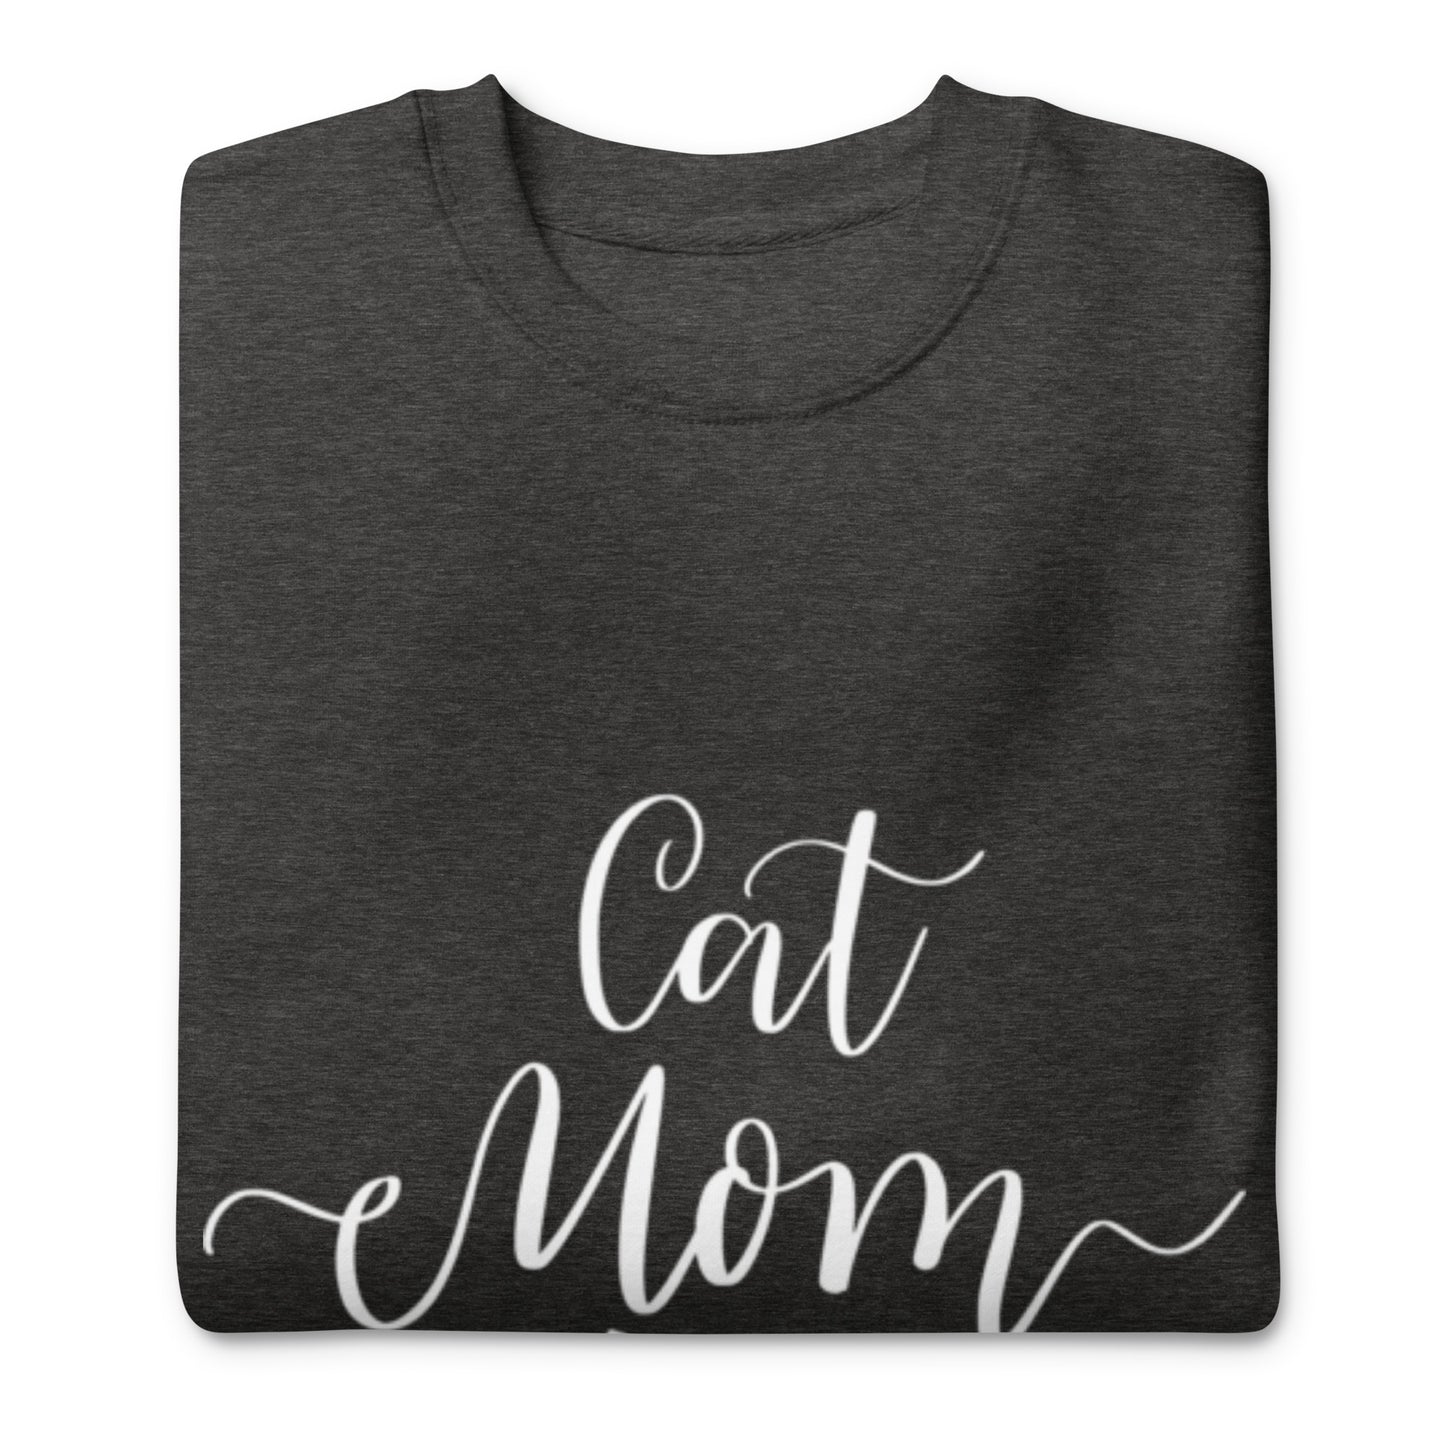 Cat Mom & Kitty Face - Sweatshirt